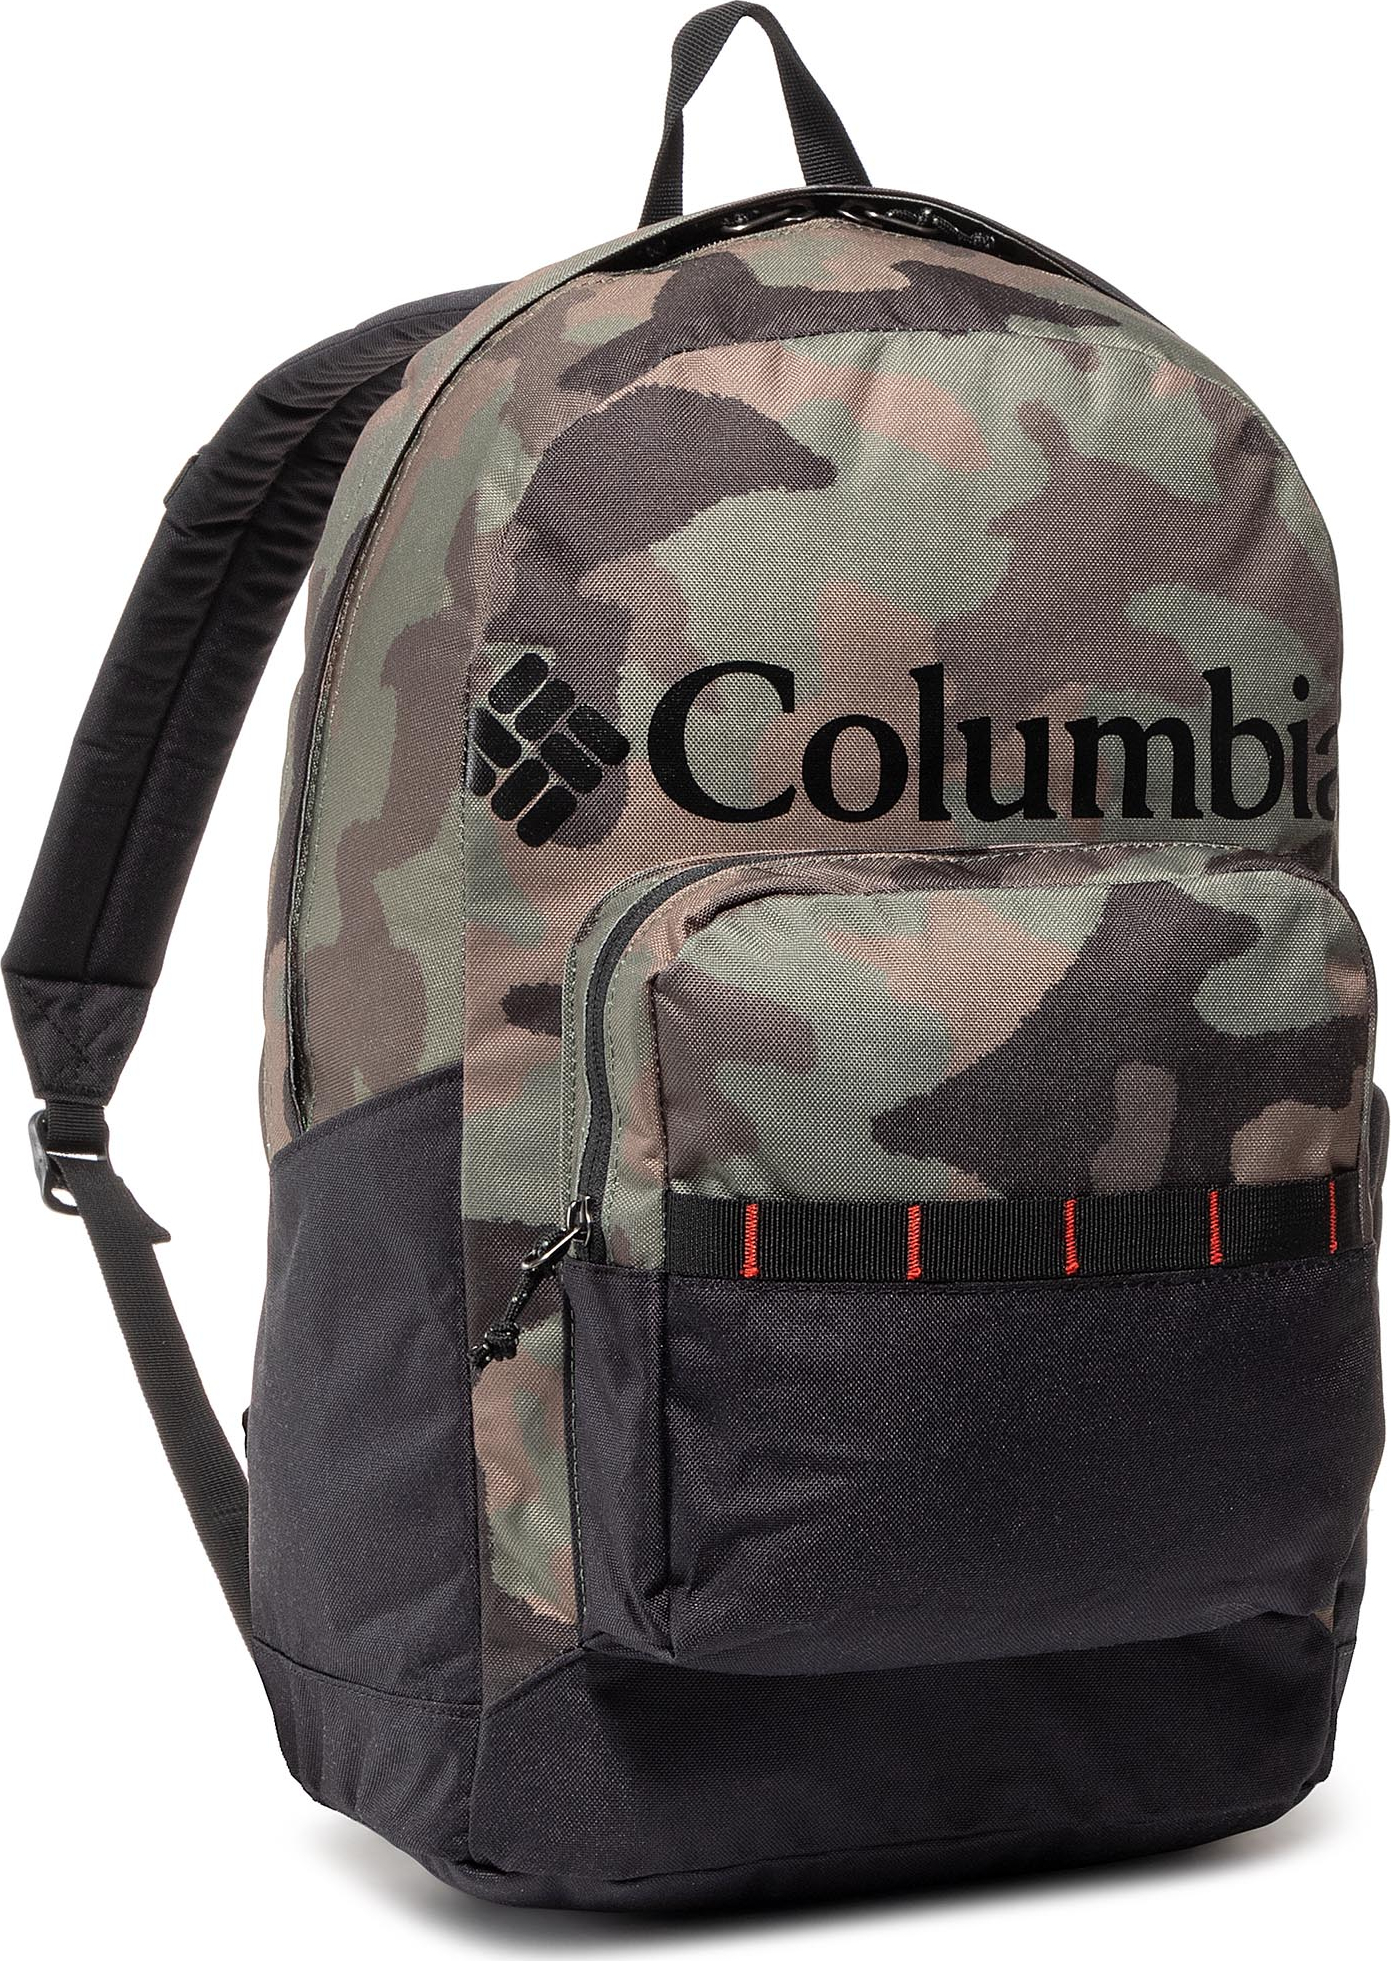 Columbia Zigzag 22l Backpack 1890021316